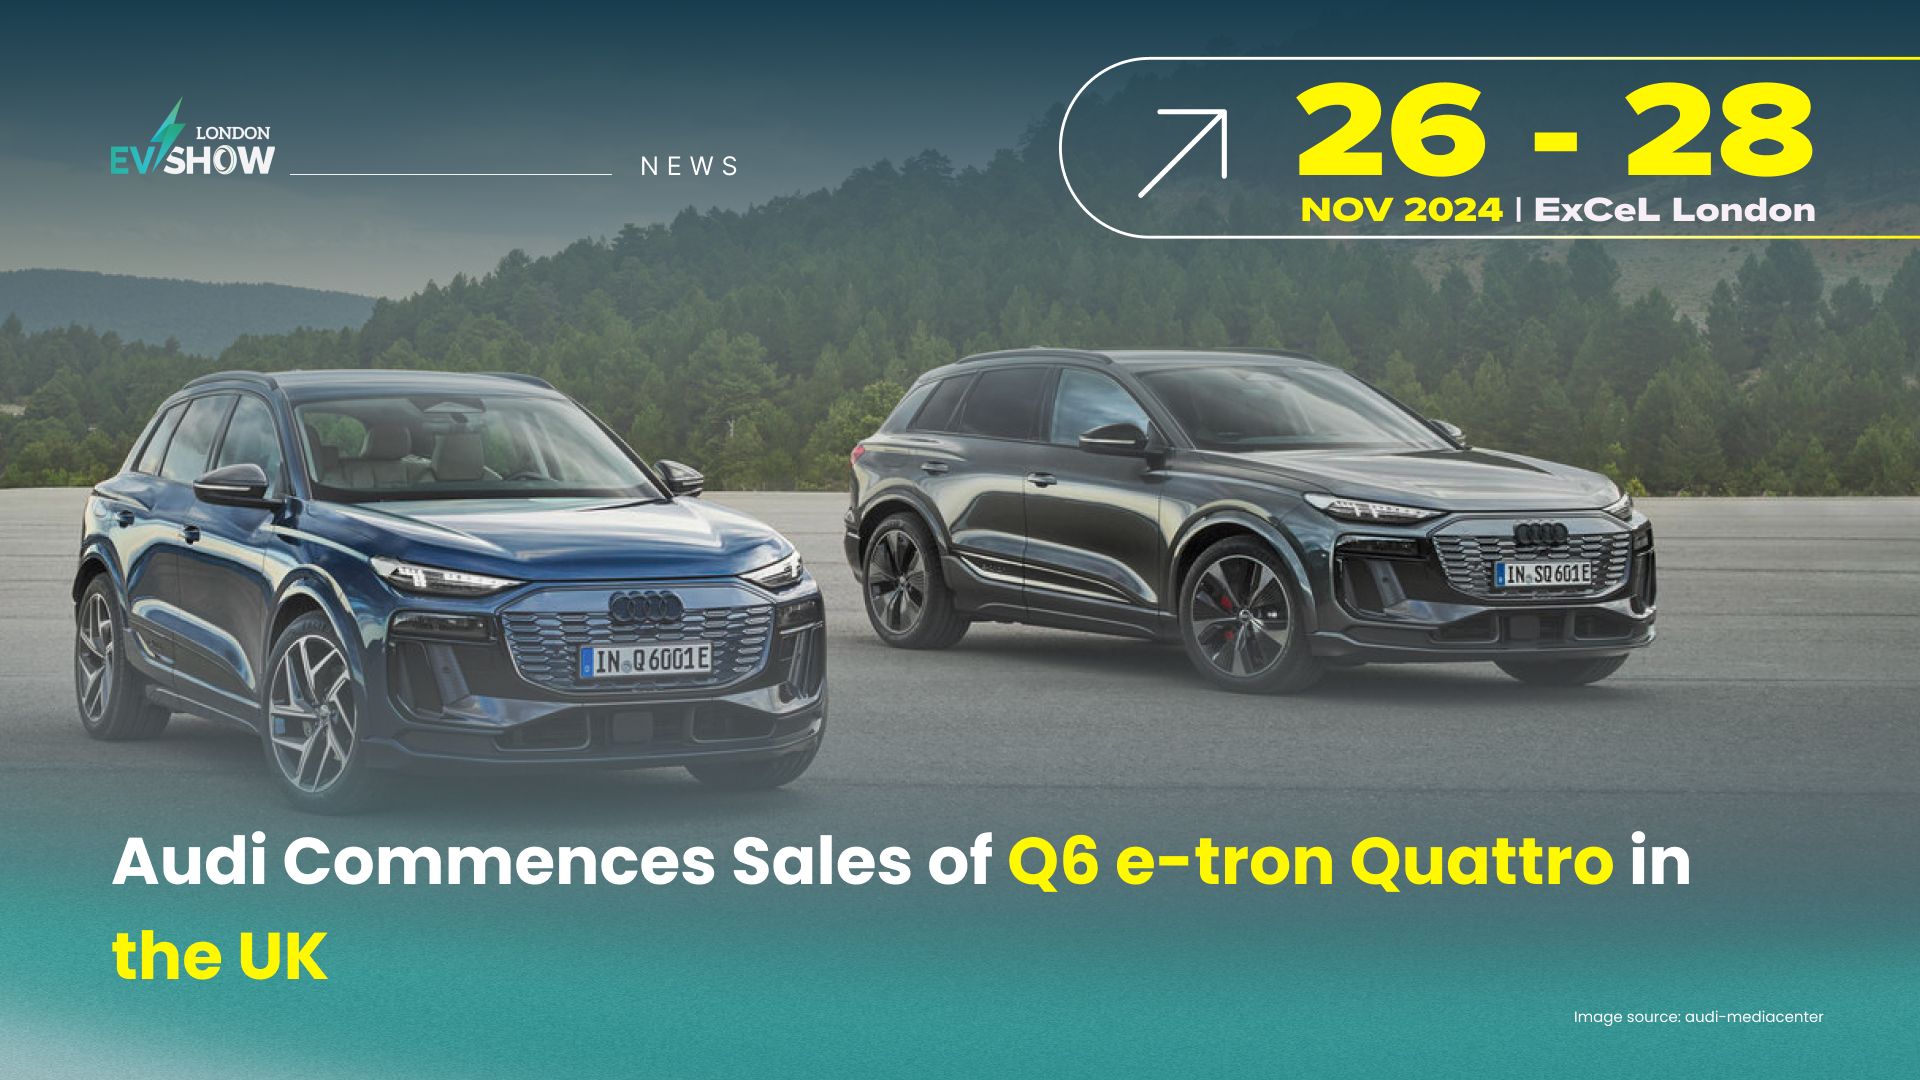 Audi Commences Sales of Q6 e-tron Quattro in the UK